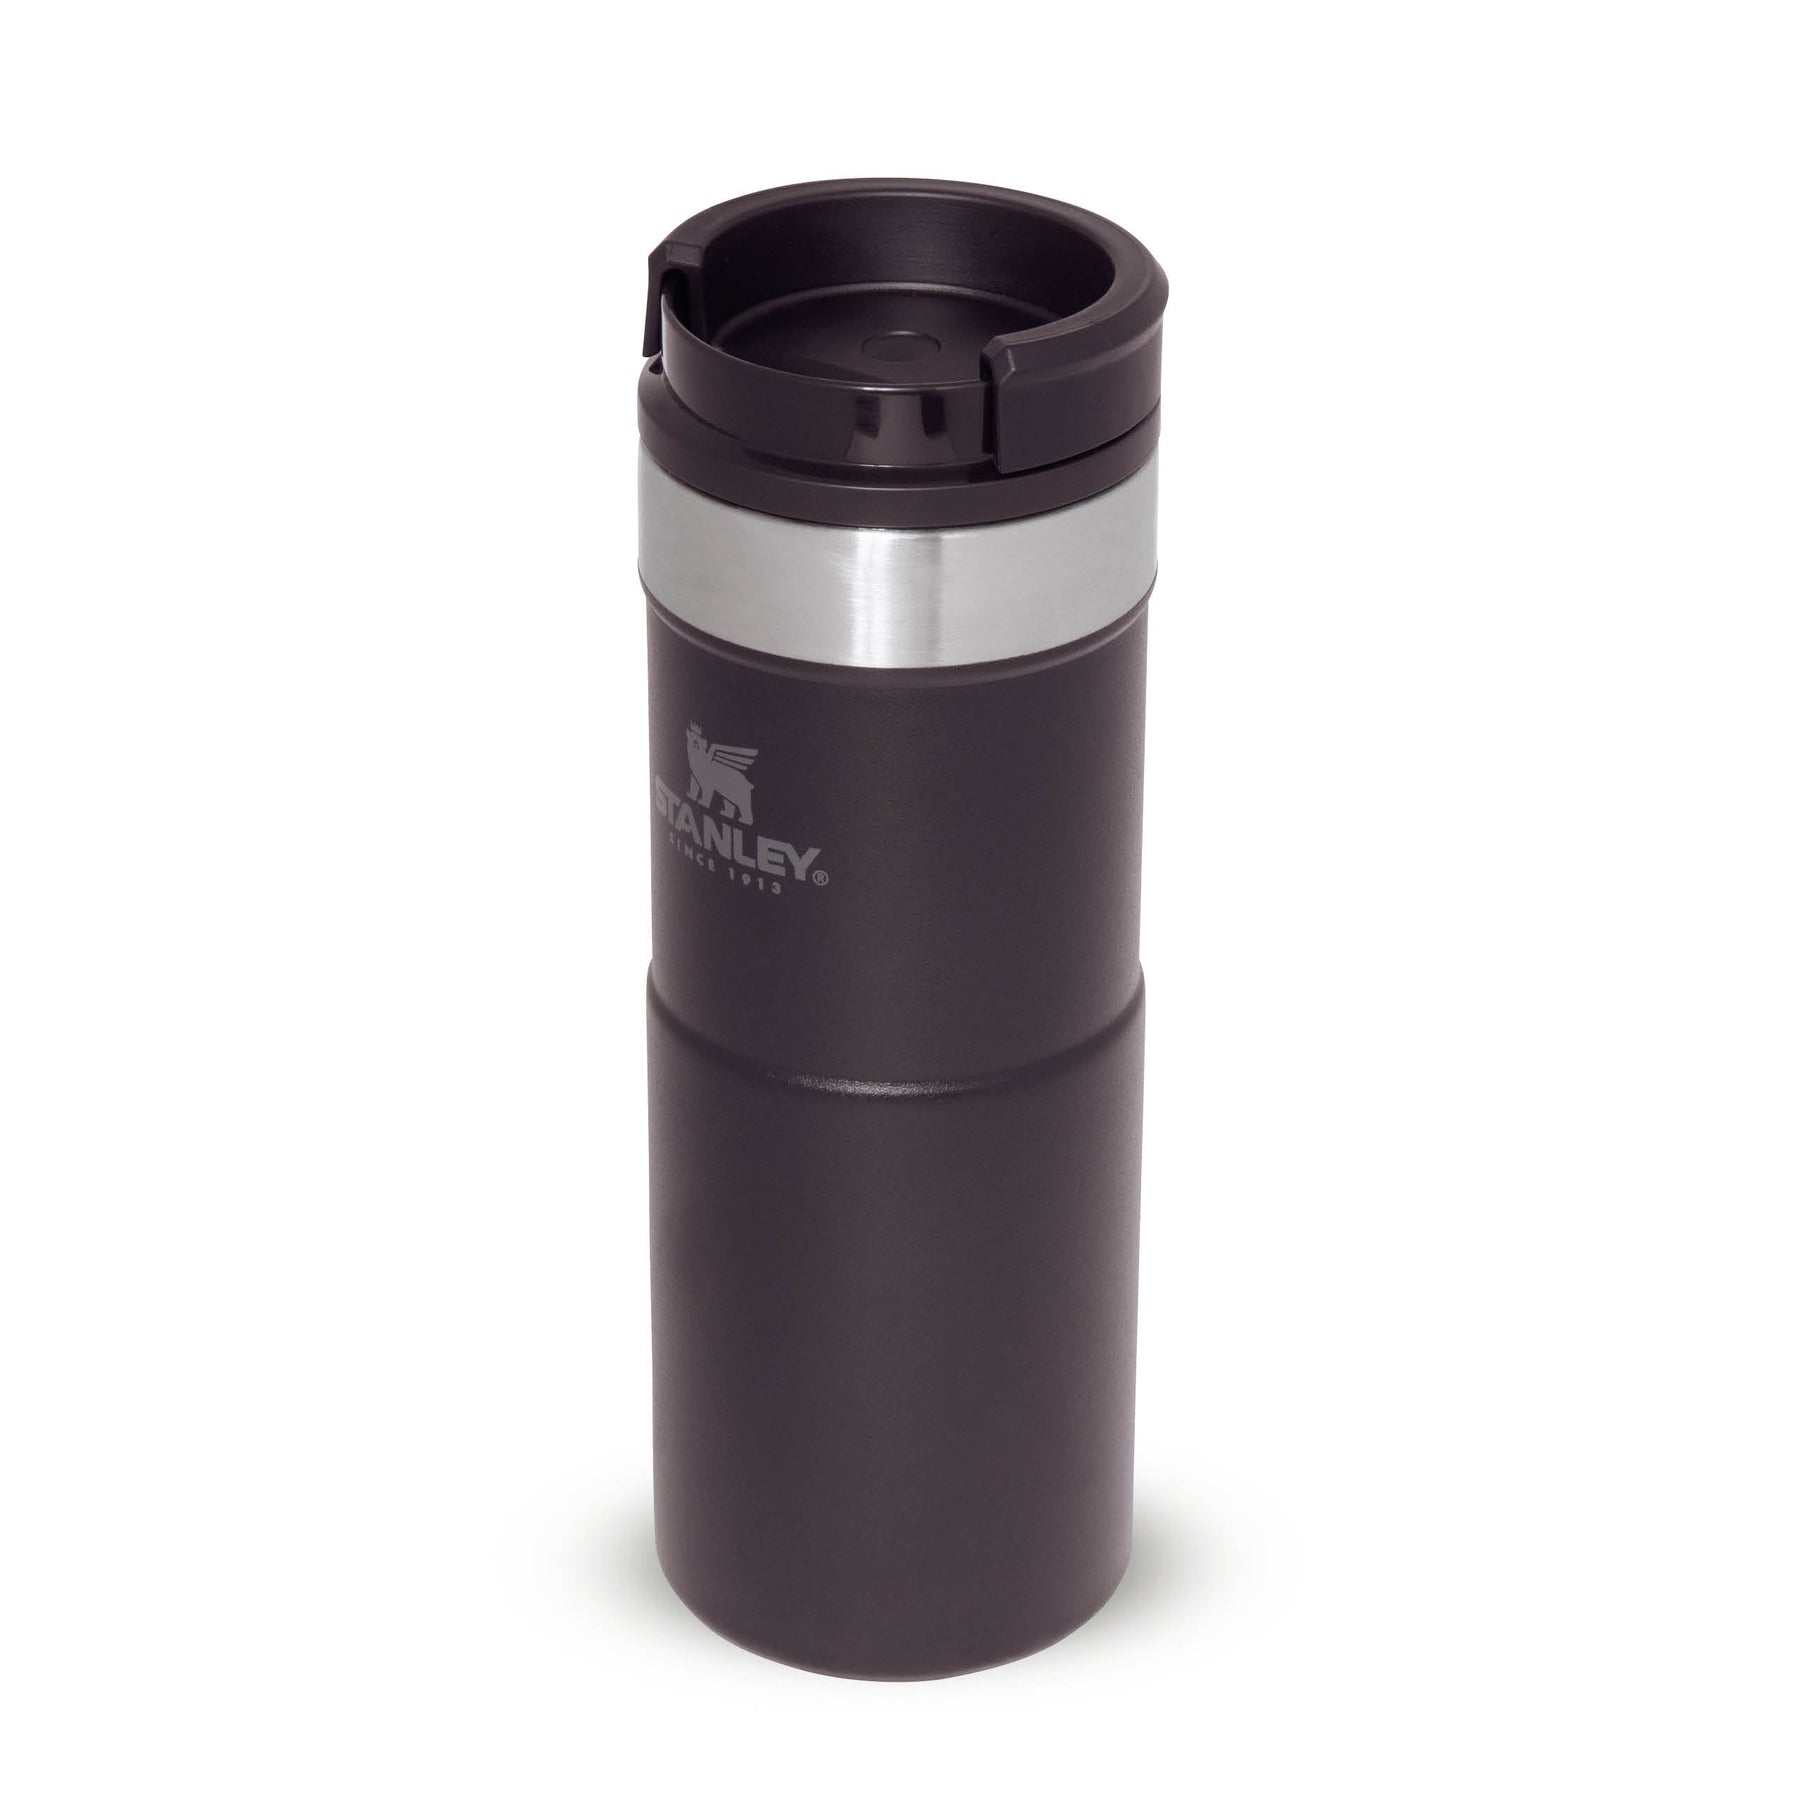 Stanley Classic 12 oz Charcoal Gray BPA Free Insulated Mug